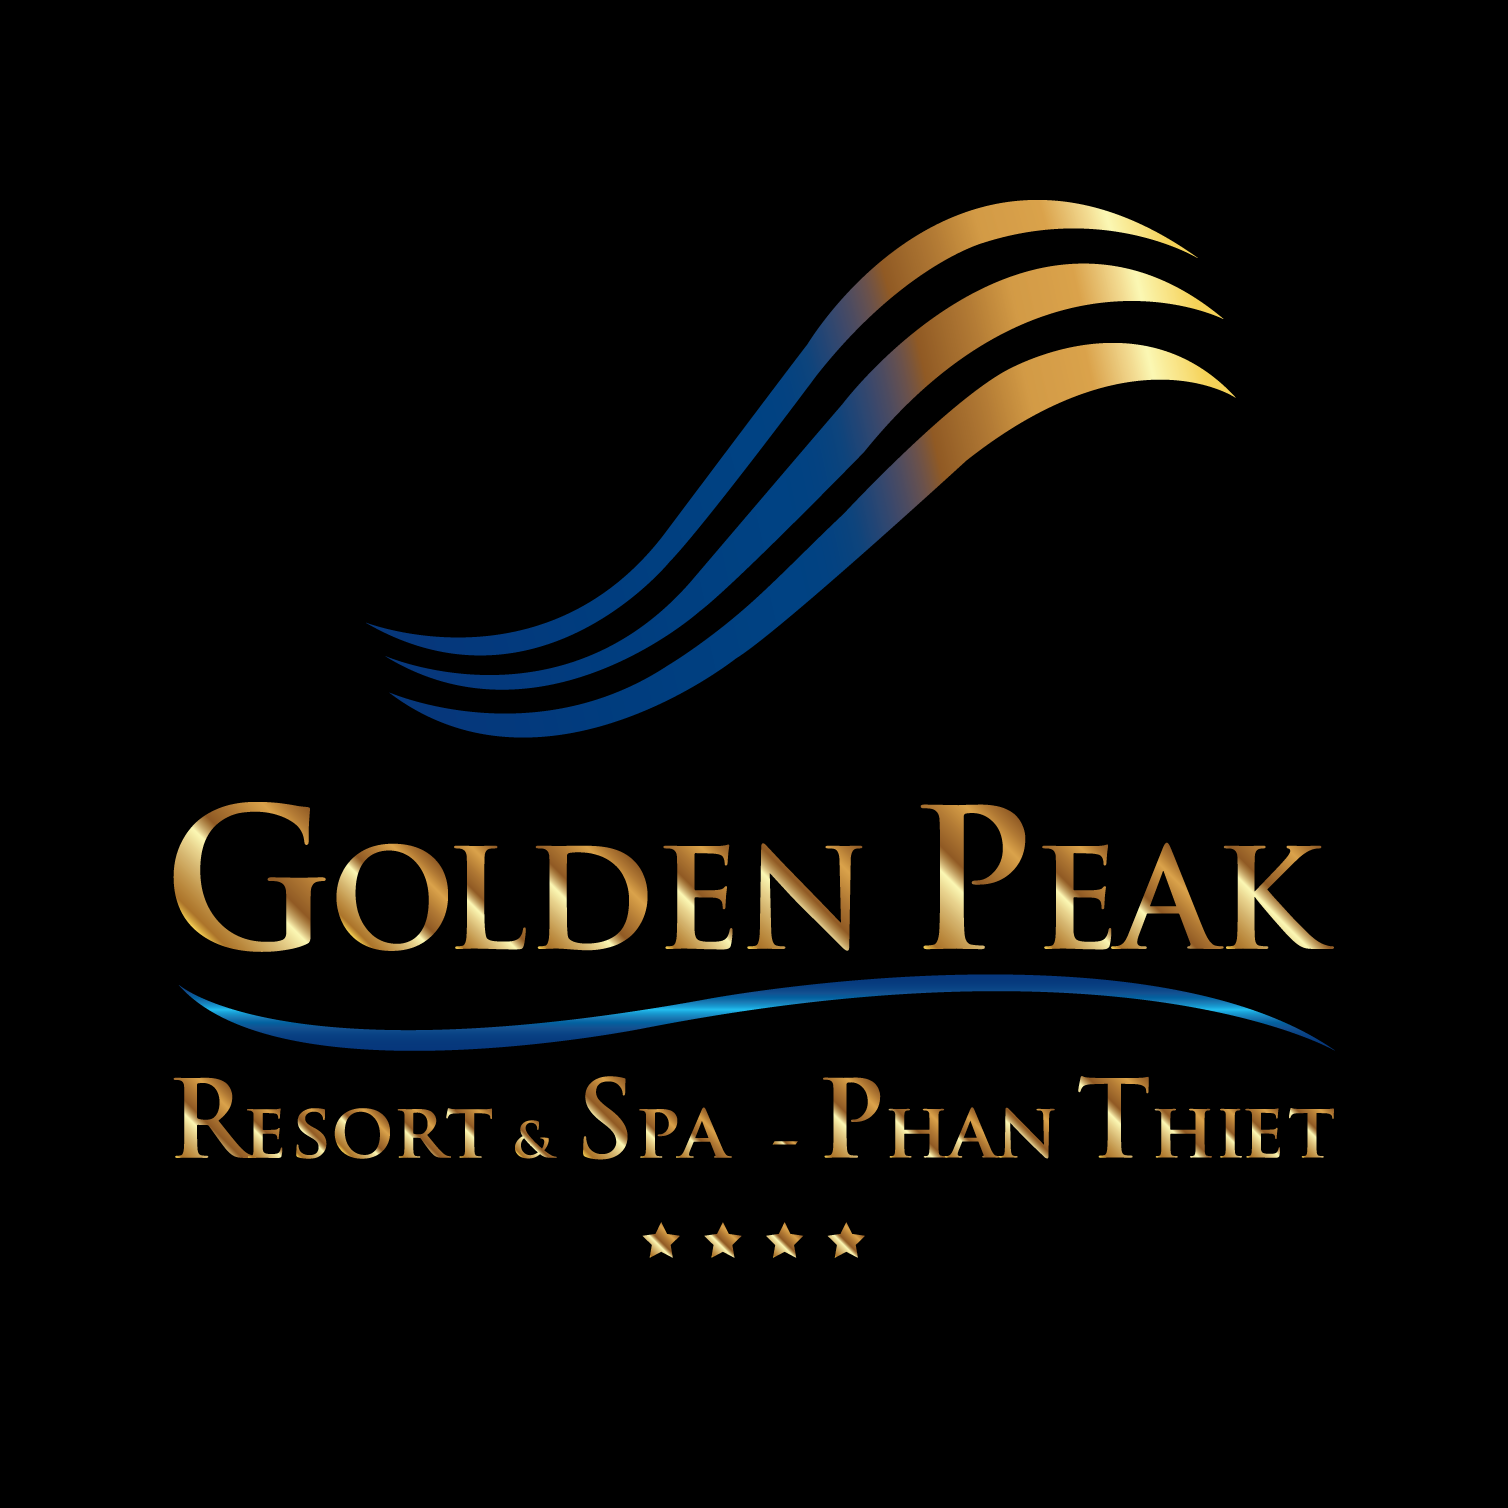 Golden Peak Resort & Spa - Phan Thiet